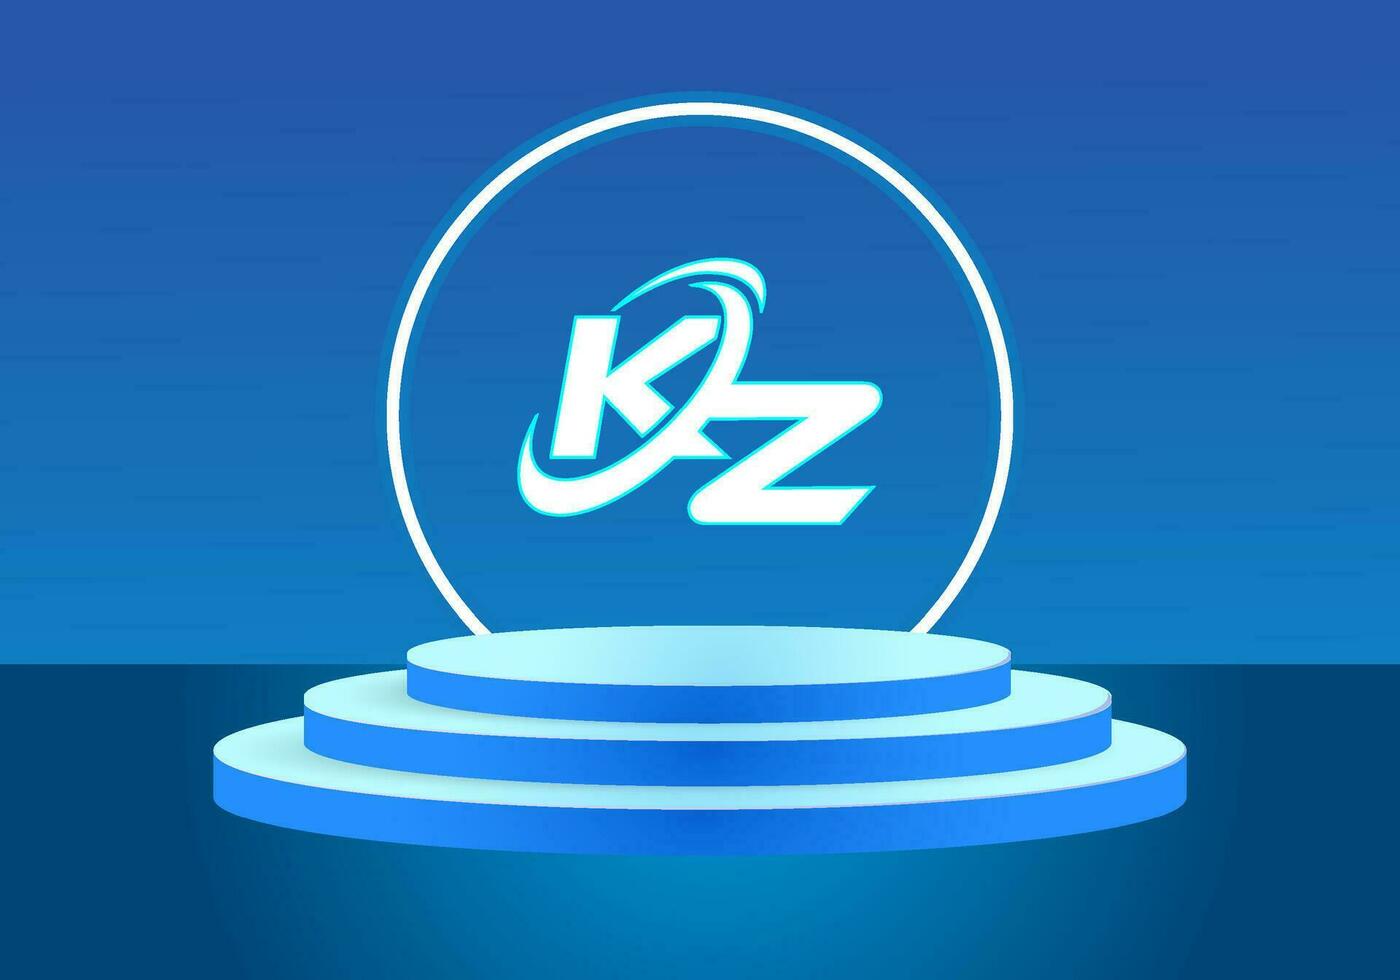 Letter MZ blue logo sign. Vector logo design for business.